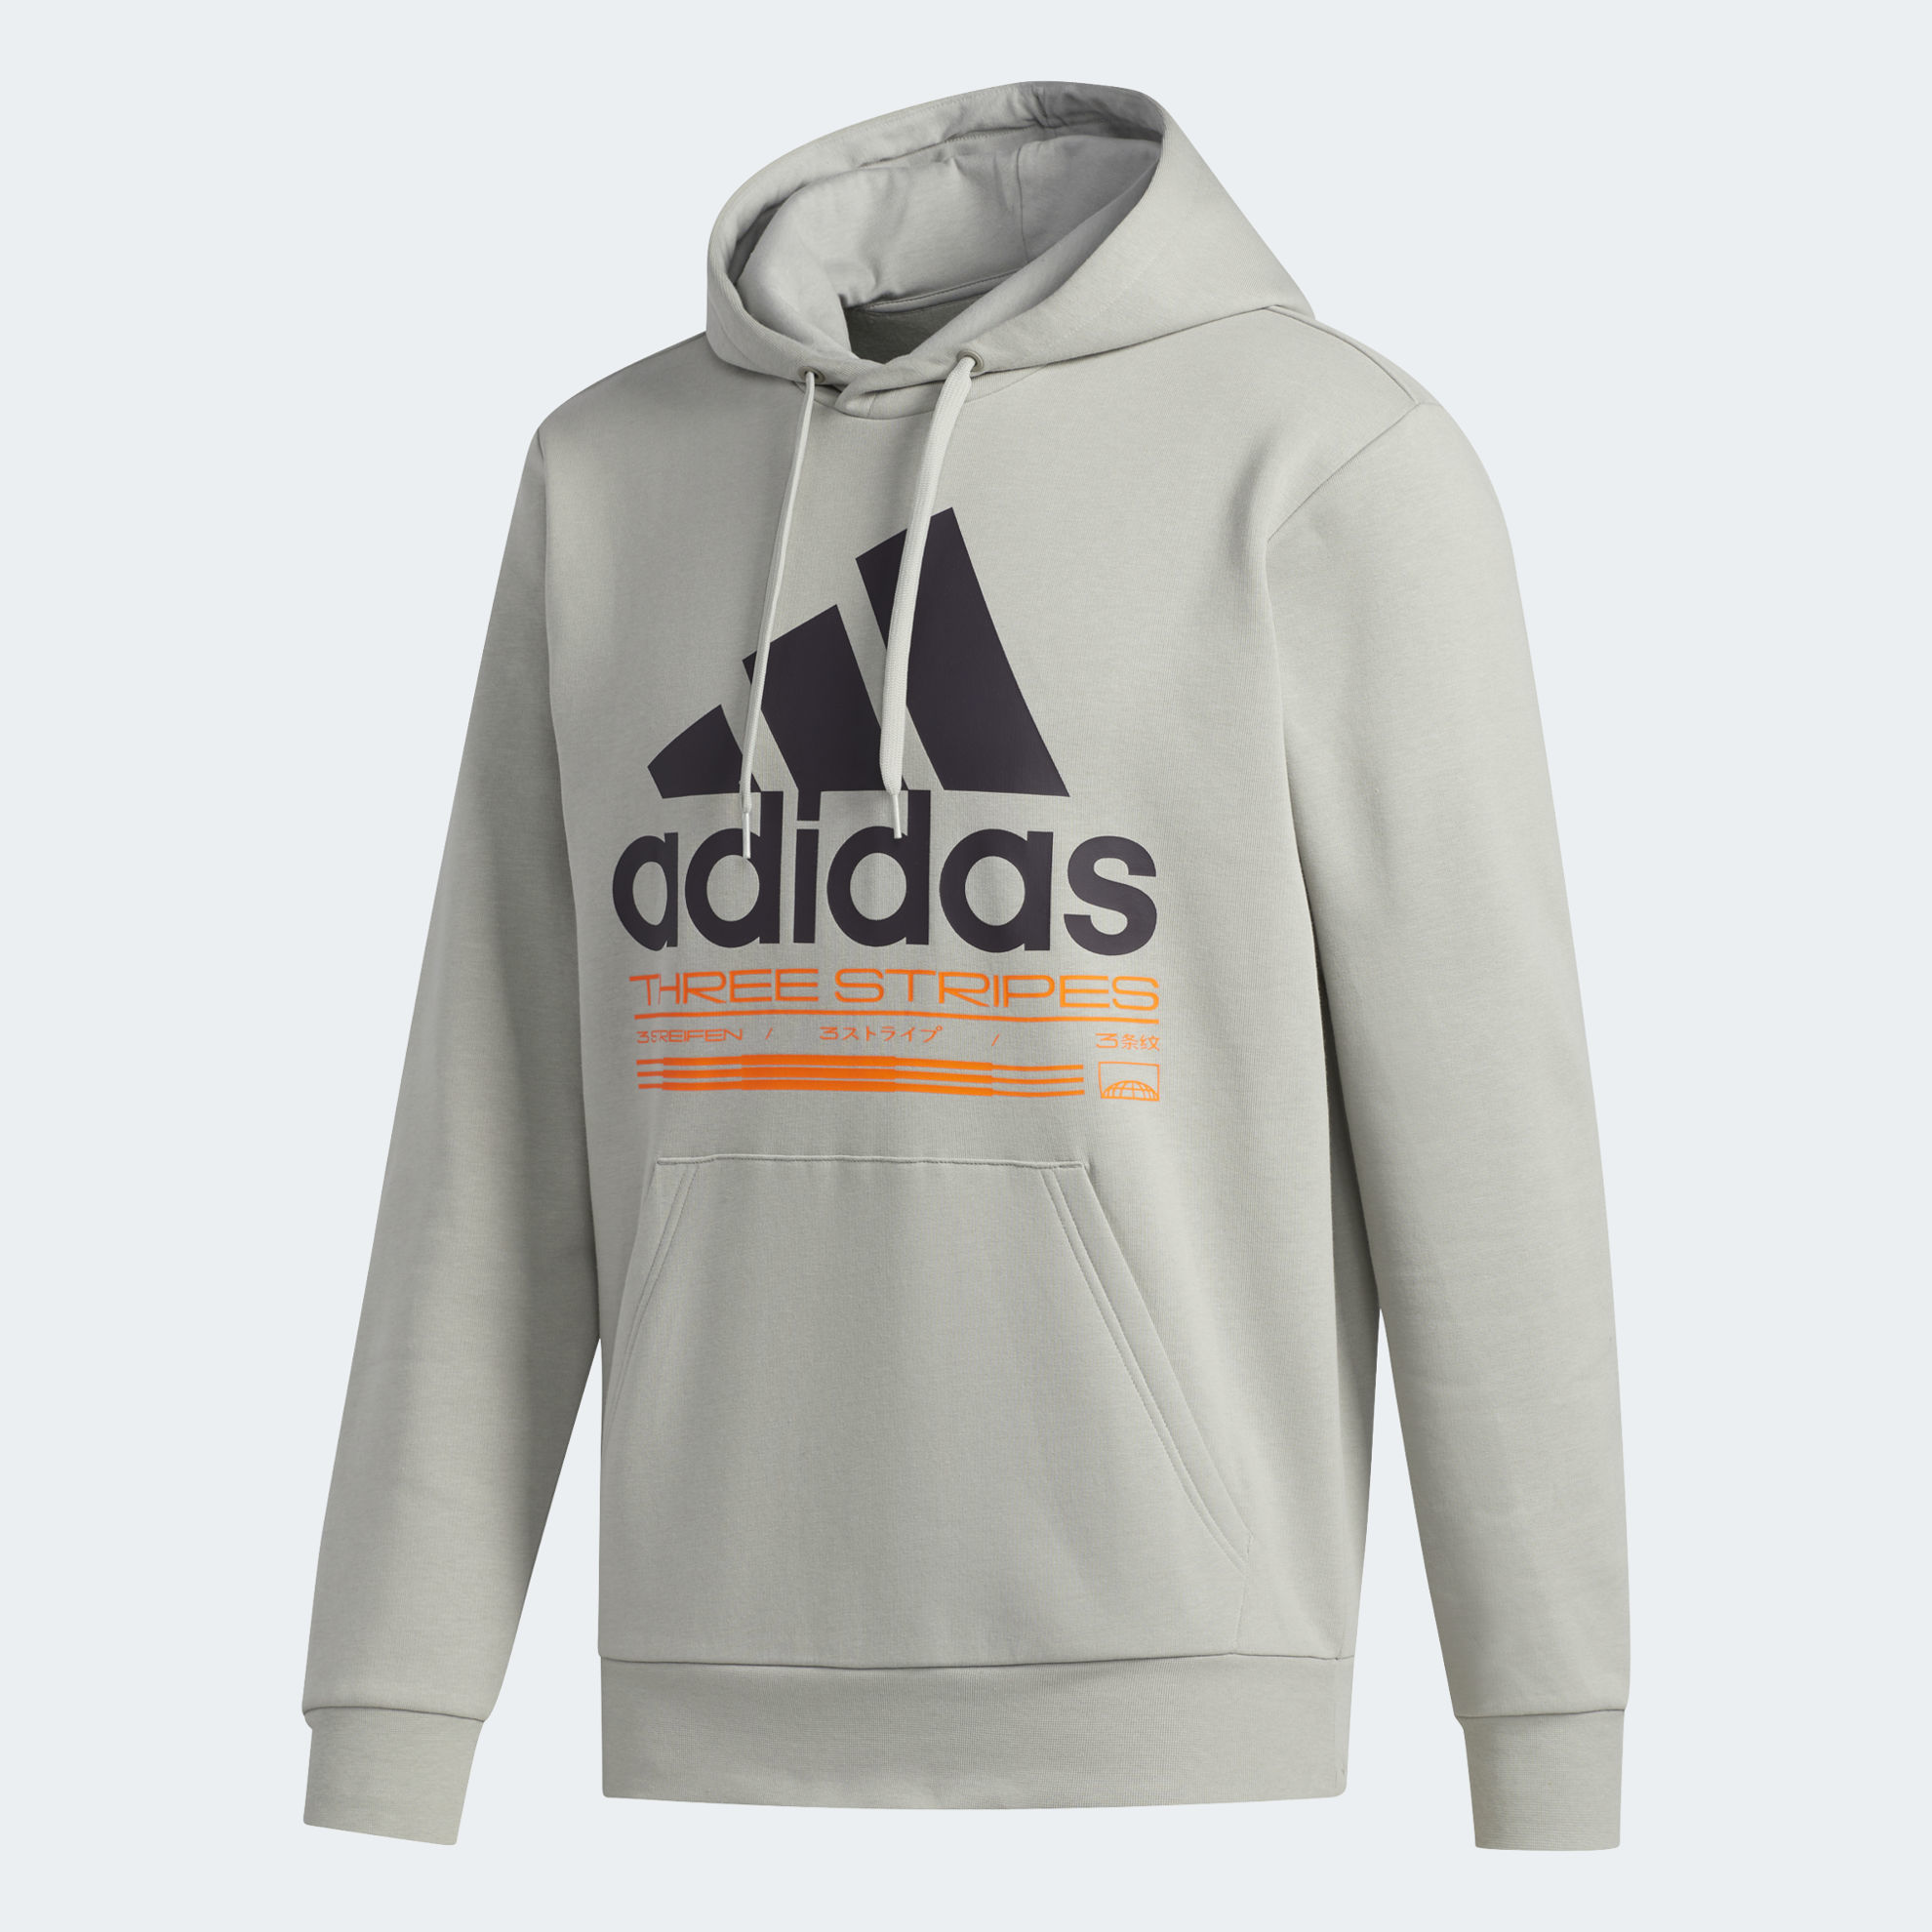 adidas international hoodie